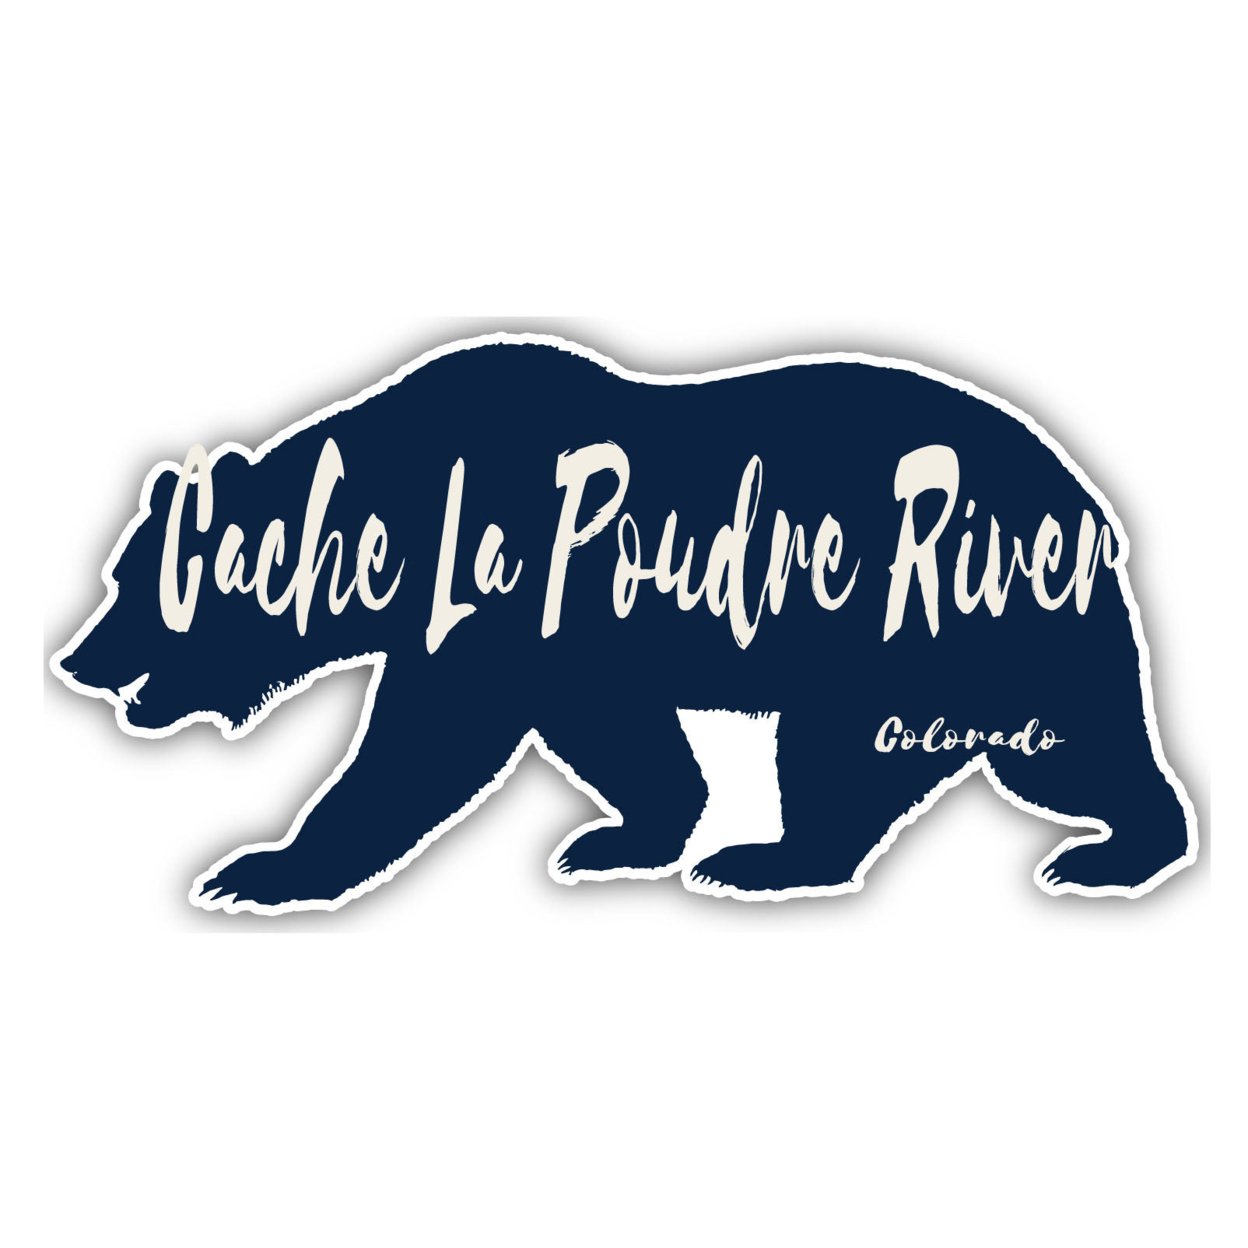 Cache La Poudre River Colorado Souvenir Decorative Stickers (Choose Theme And Size) - 4-Pack, 4-Inch, Bear